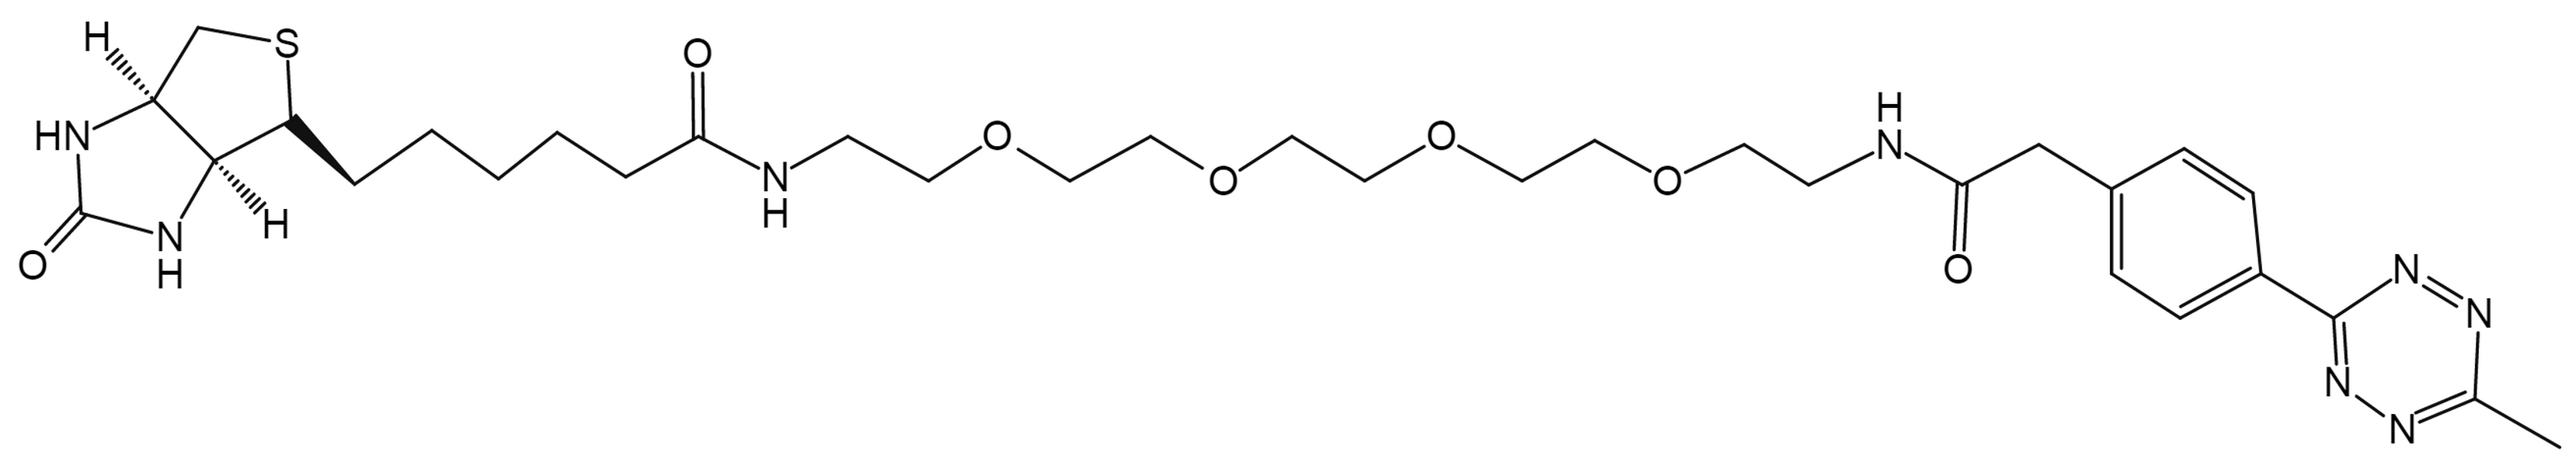 Biotin-PEG4-amido-methyltetrazine